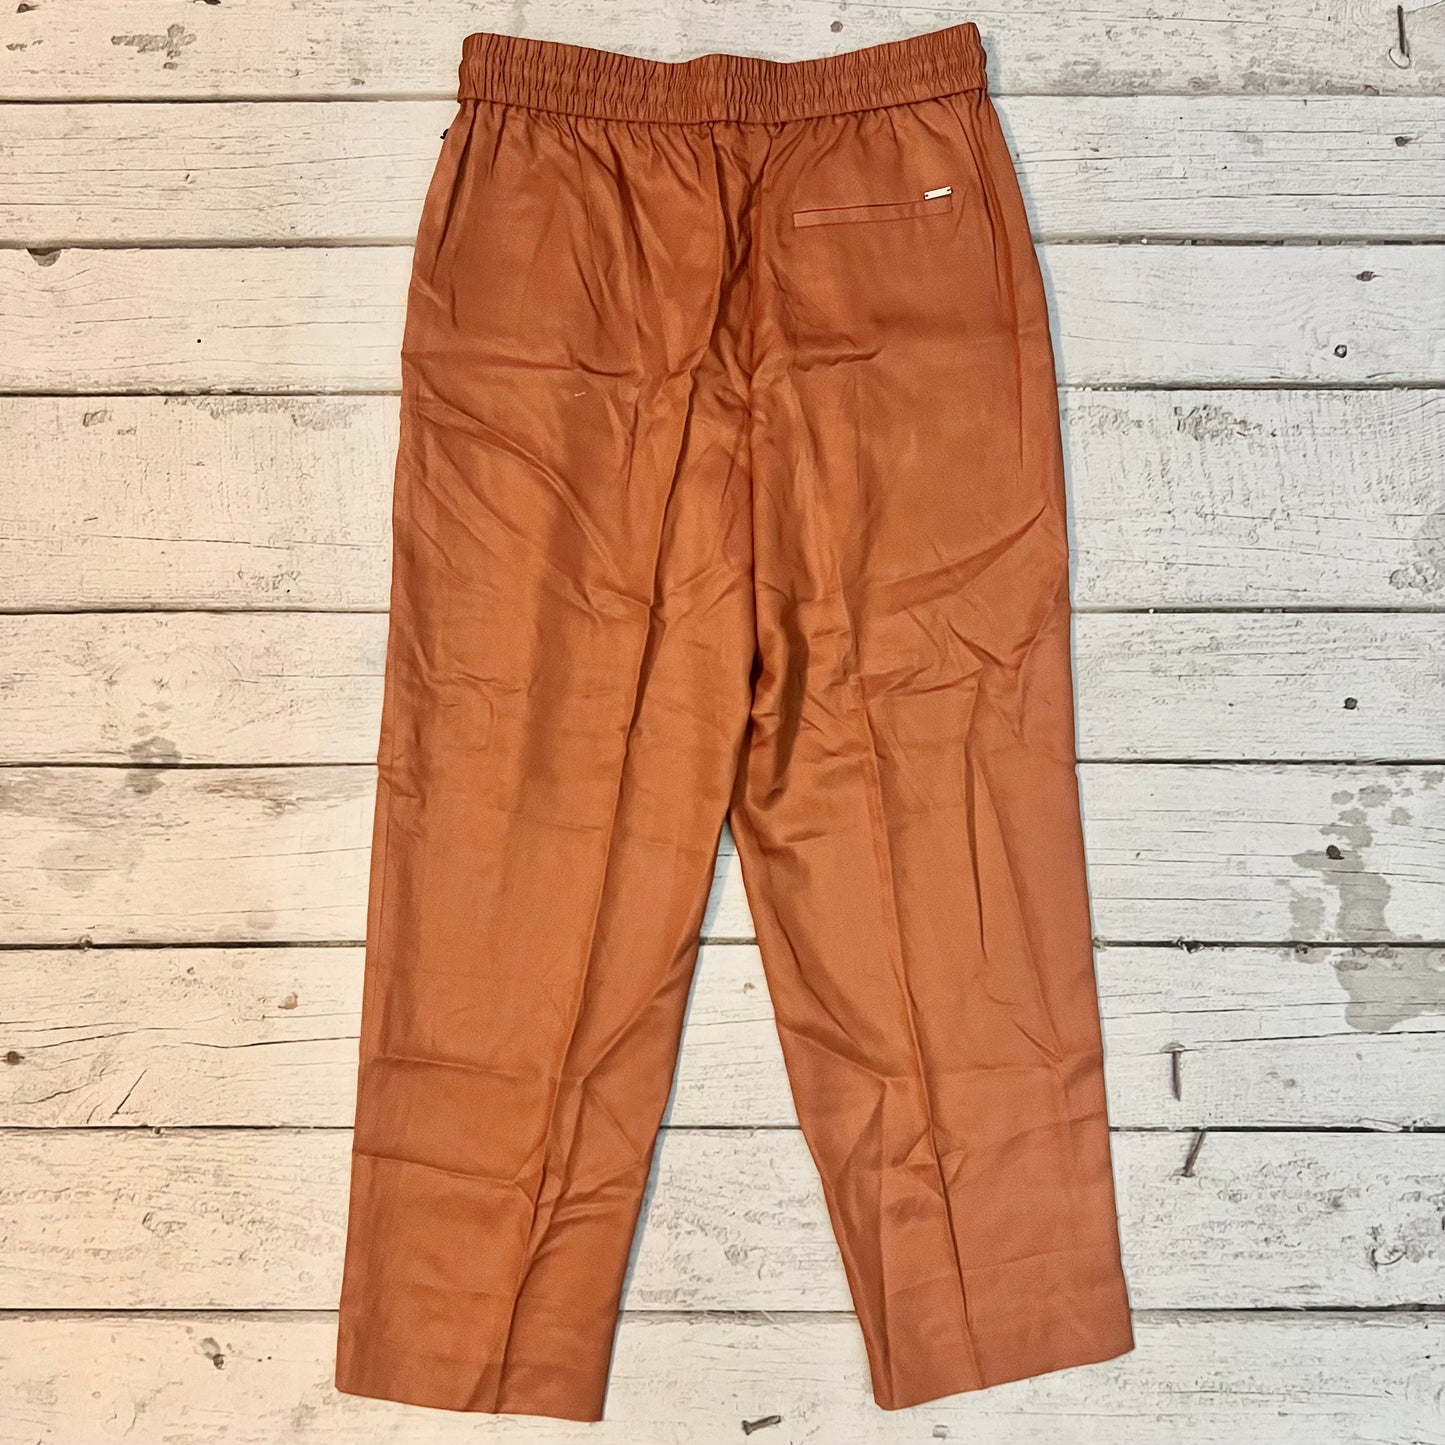 Pants Cargo & Utility By Dkny  Size: 10